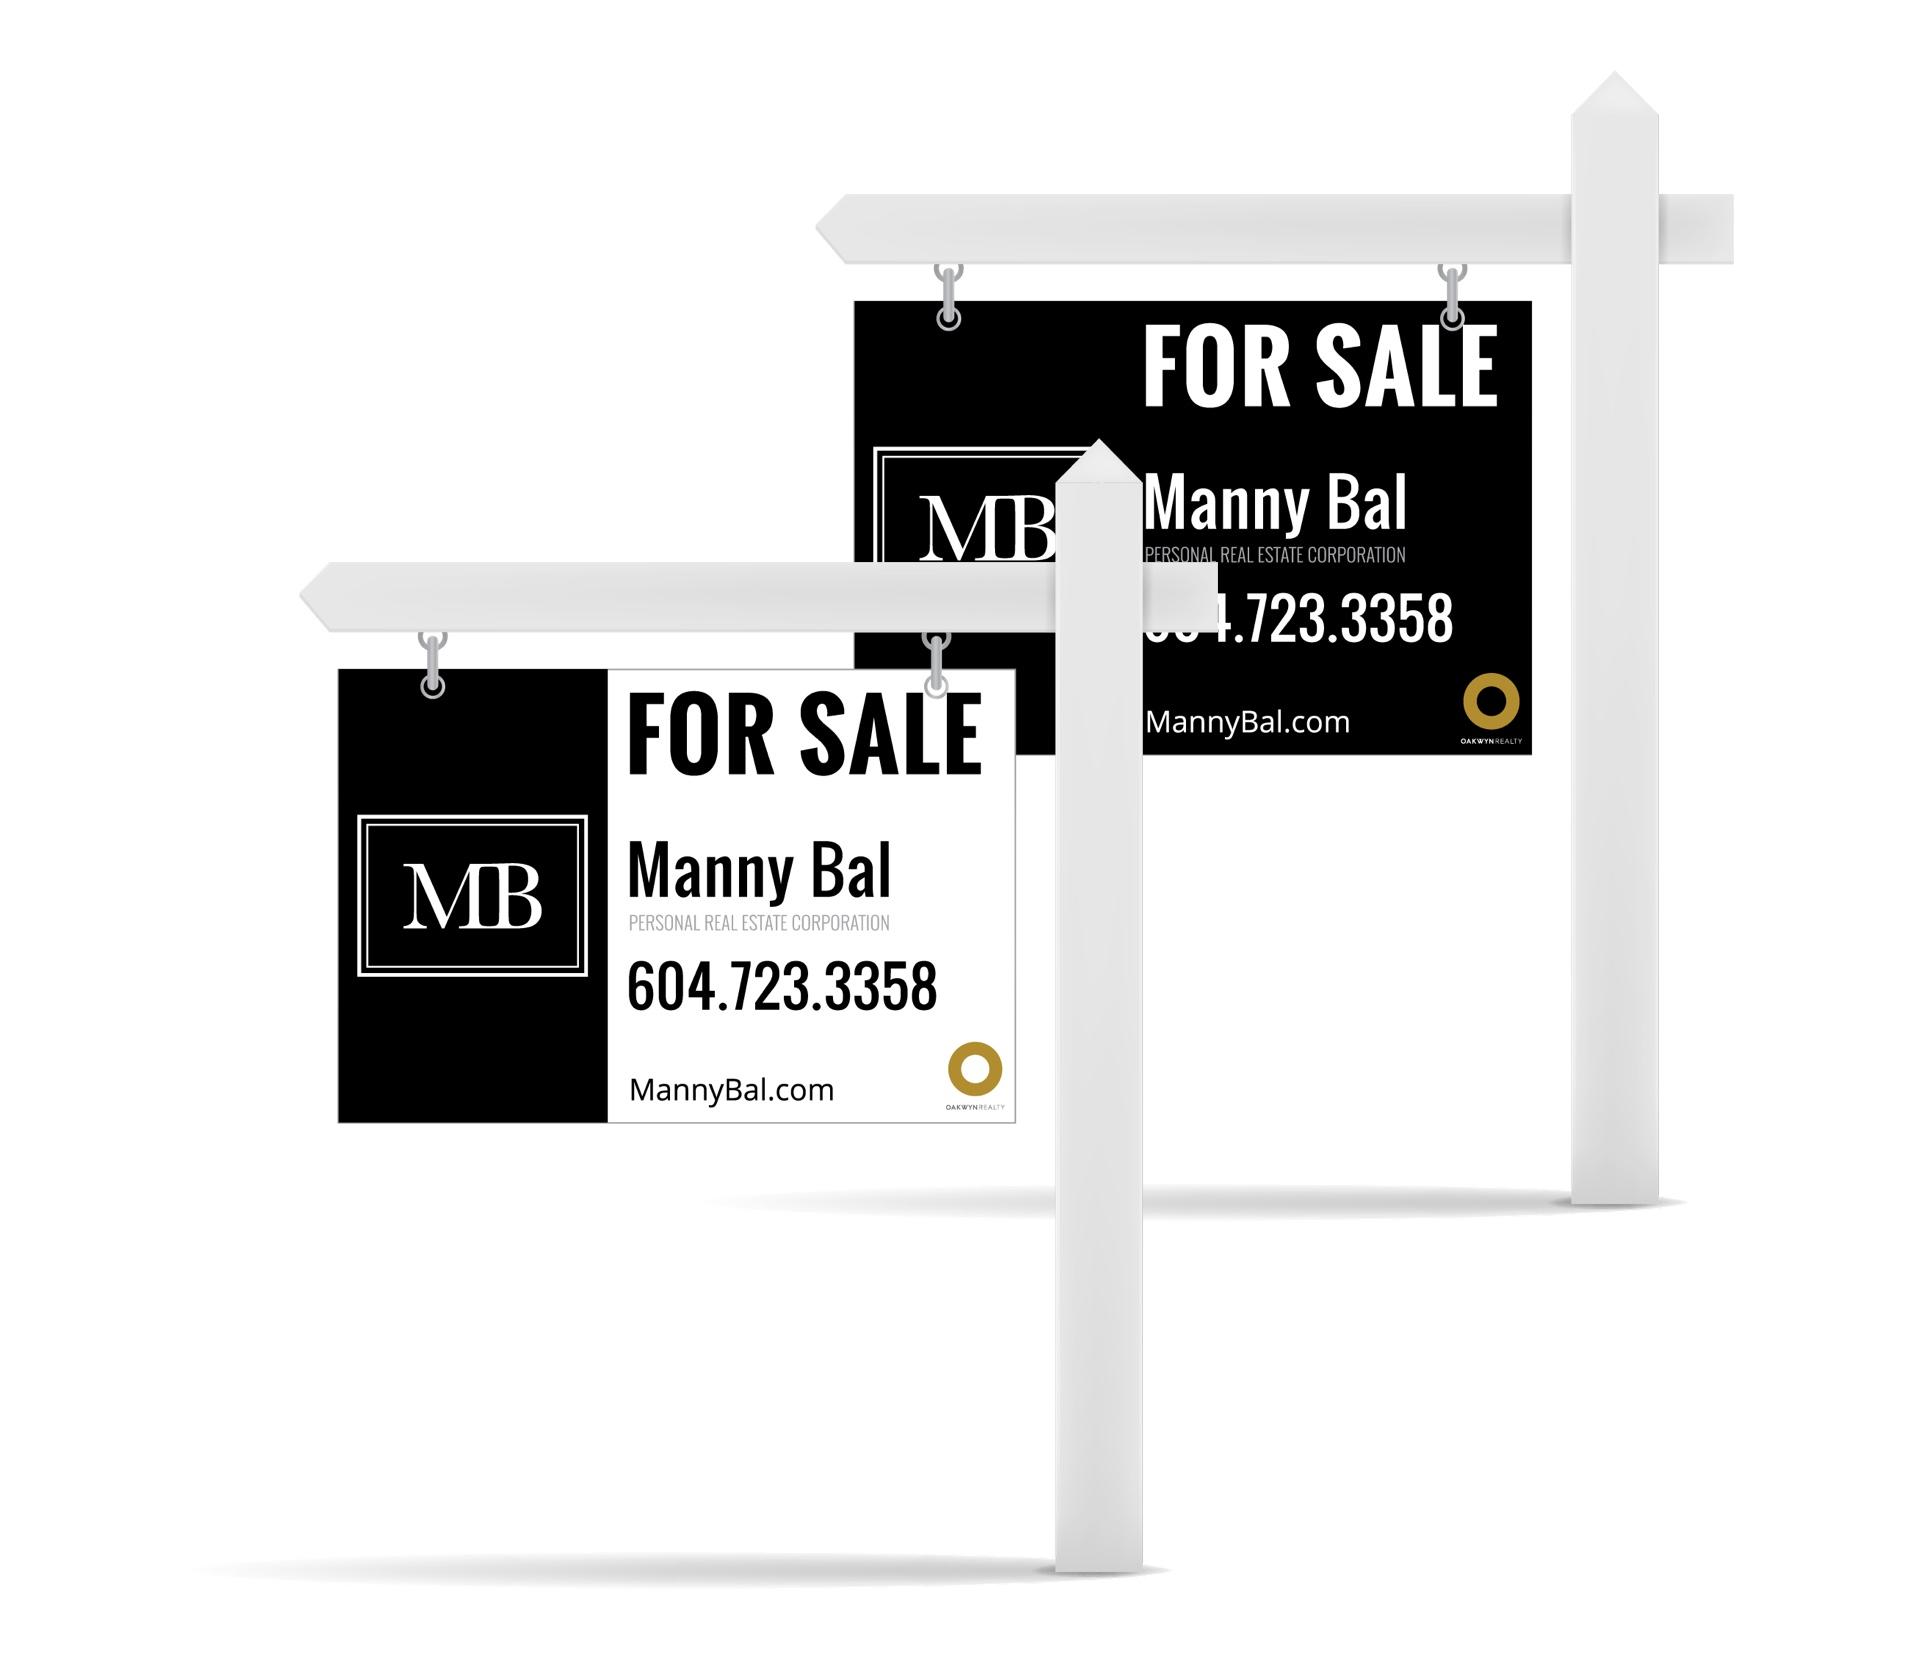 Mockup of Manny Bal's for sale sign hanging long version